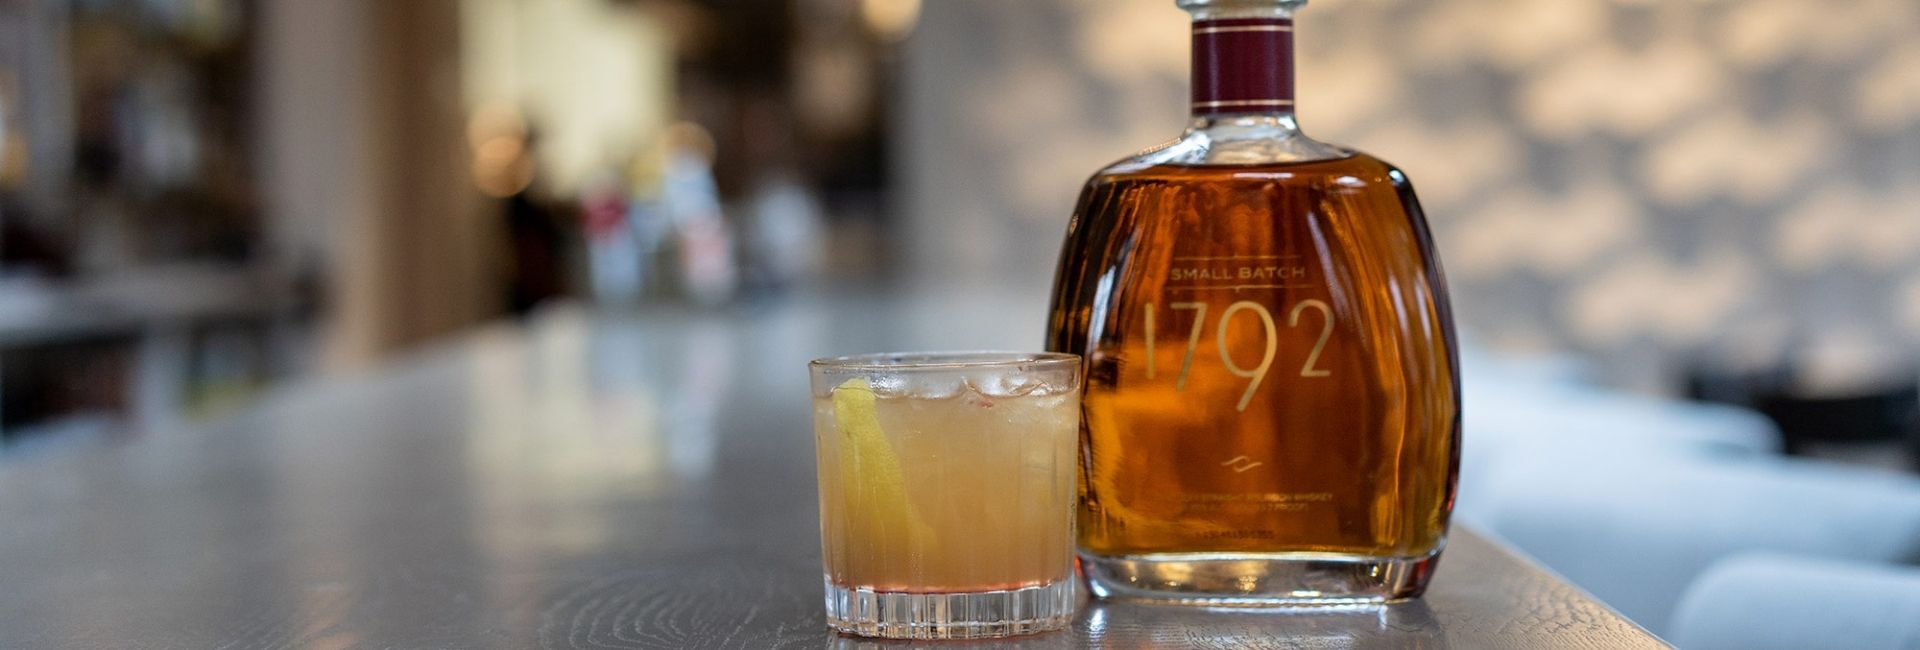 1792 Small Batch Bourbon review